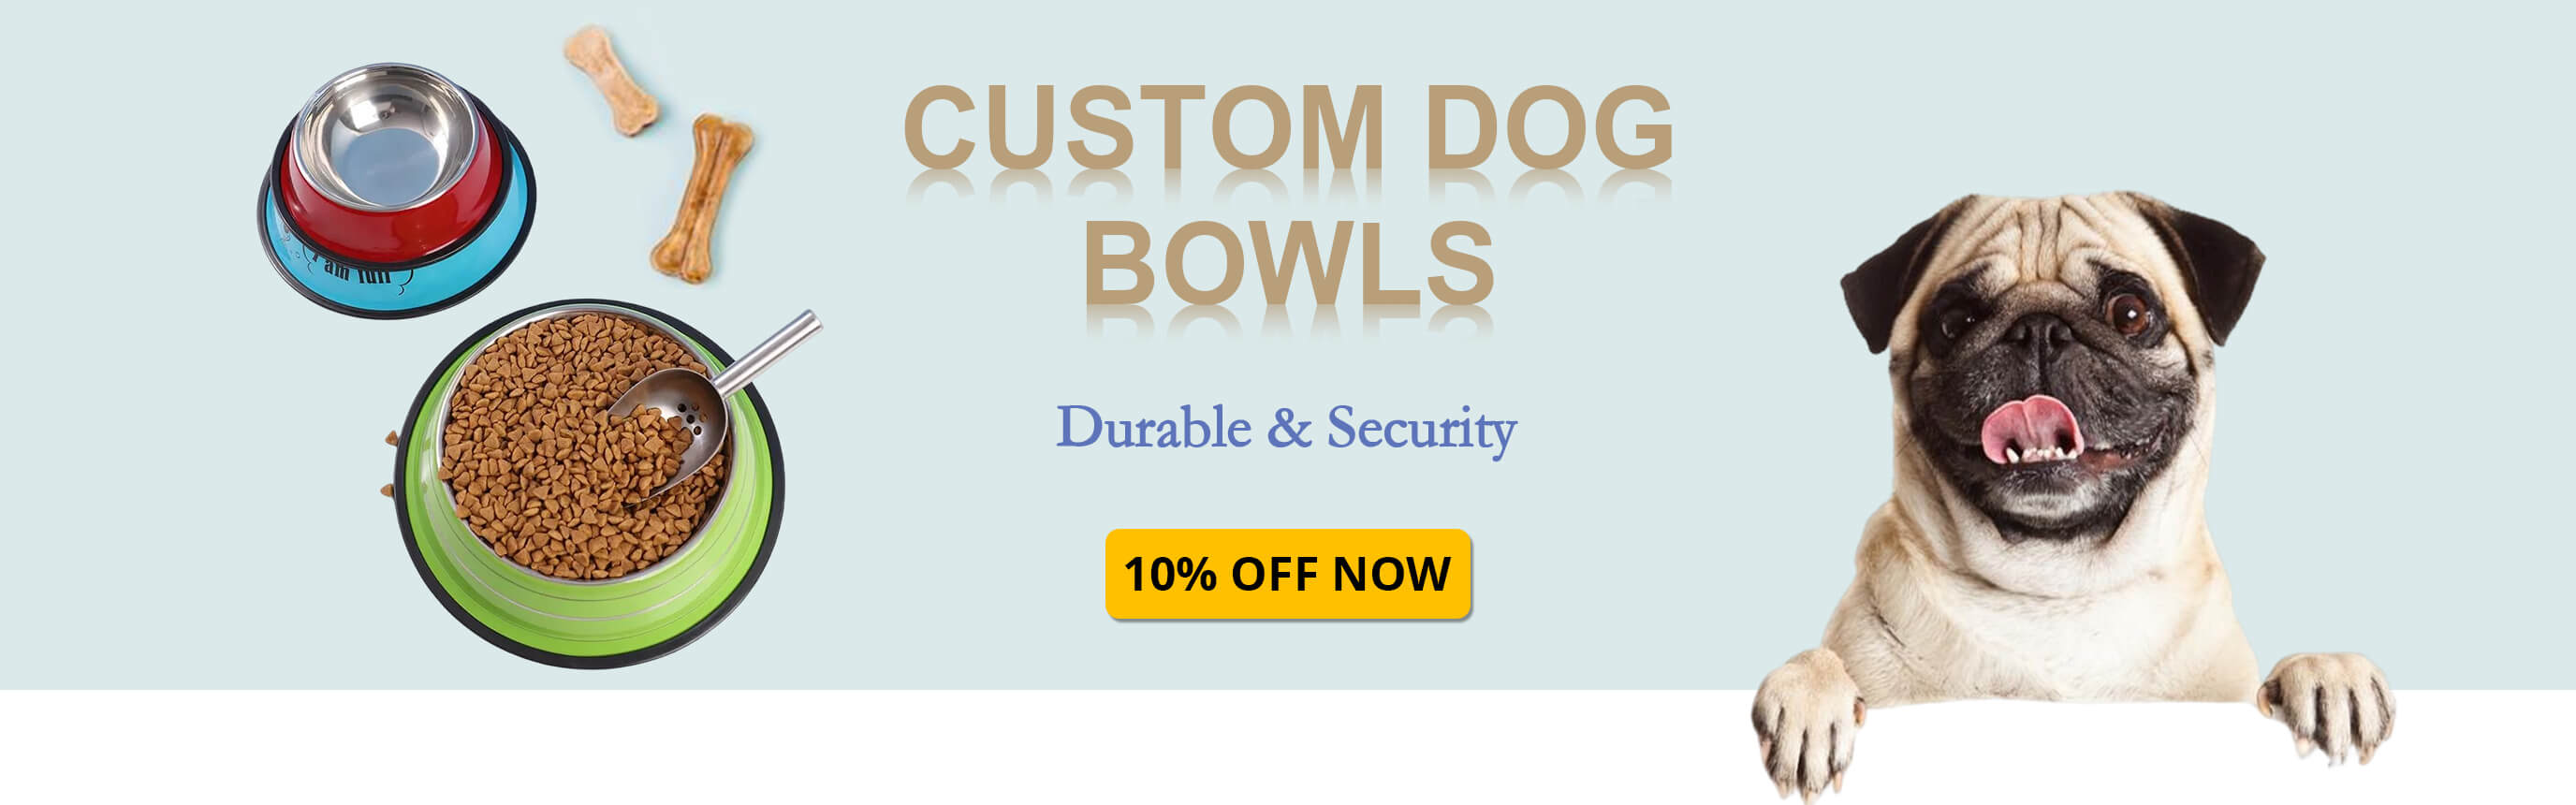 https://4inbandana.com/assets/img/custom-dog-bowl/custom-dog-bowl-22.jpg